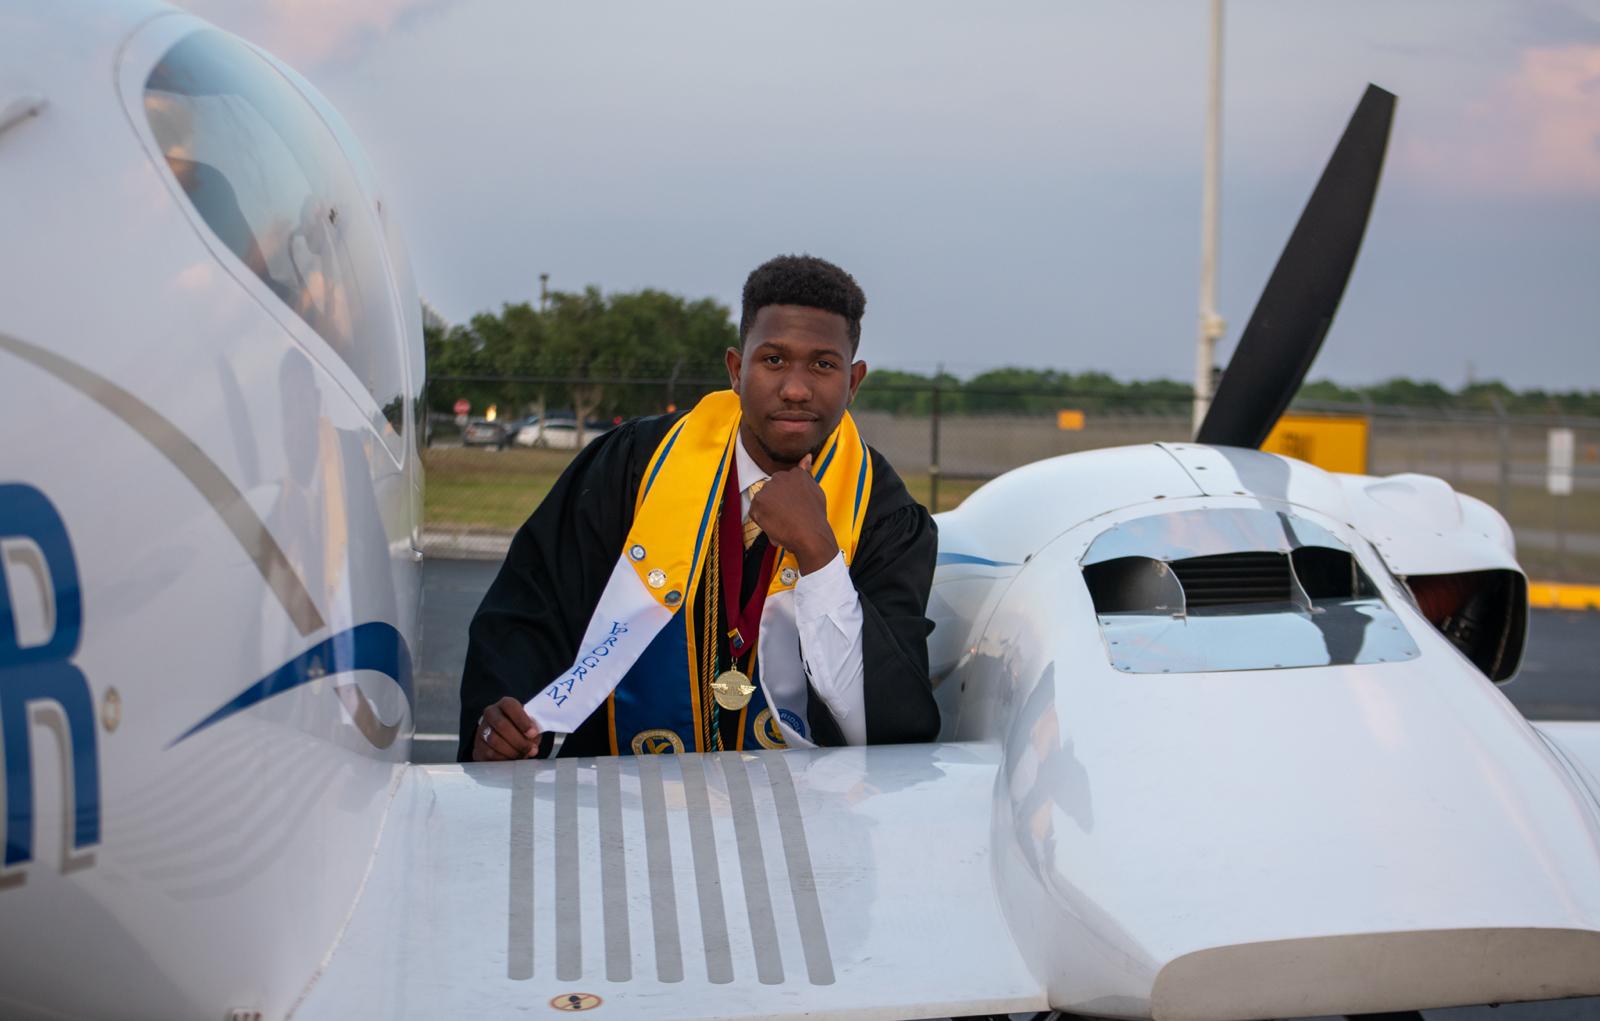 Trinidadian student Nathaniel West obtained top honours at the prestigious university for Aeronautical Science in Florida- Embry-Riddle Aeronautical University (ERAU).
